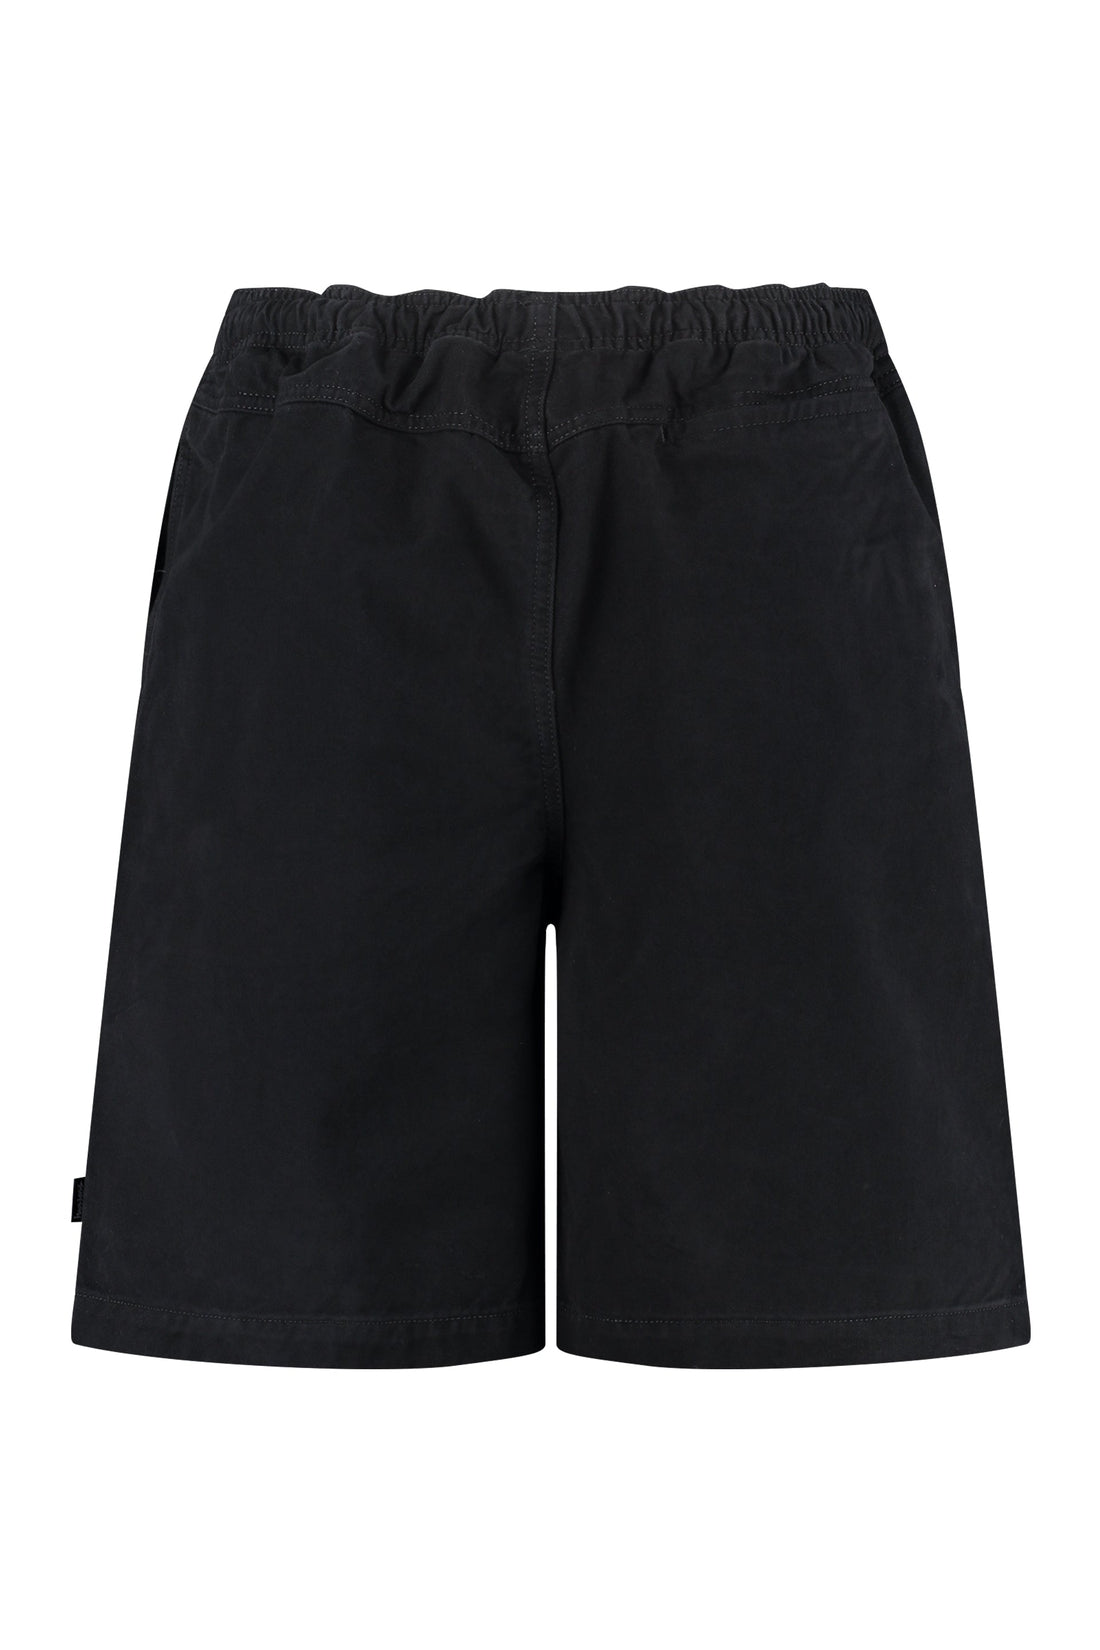 Stüssy-OUTLET-SALE-Cotton bermuda shorts-ARCHIVIST